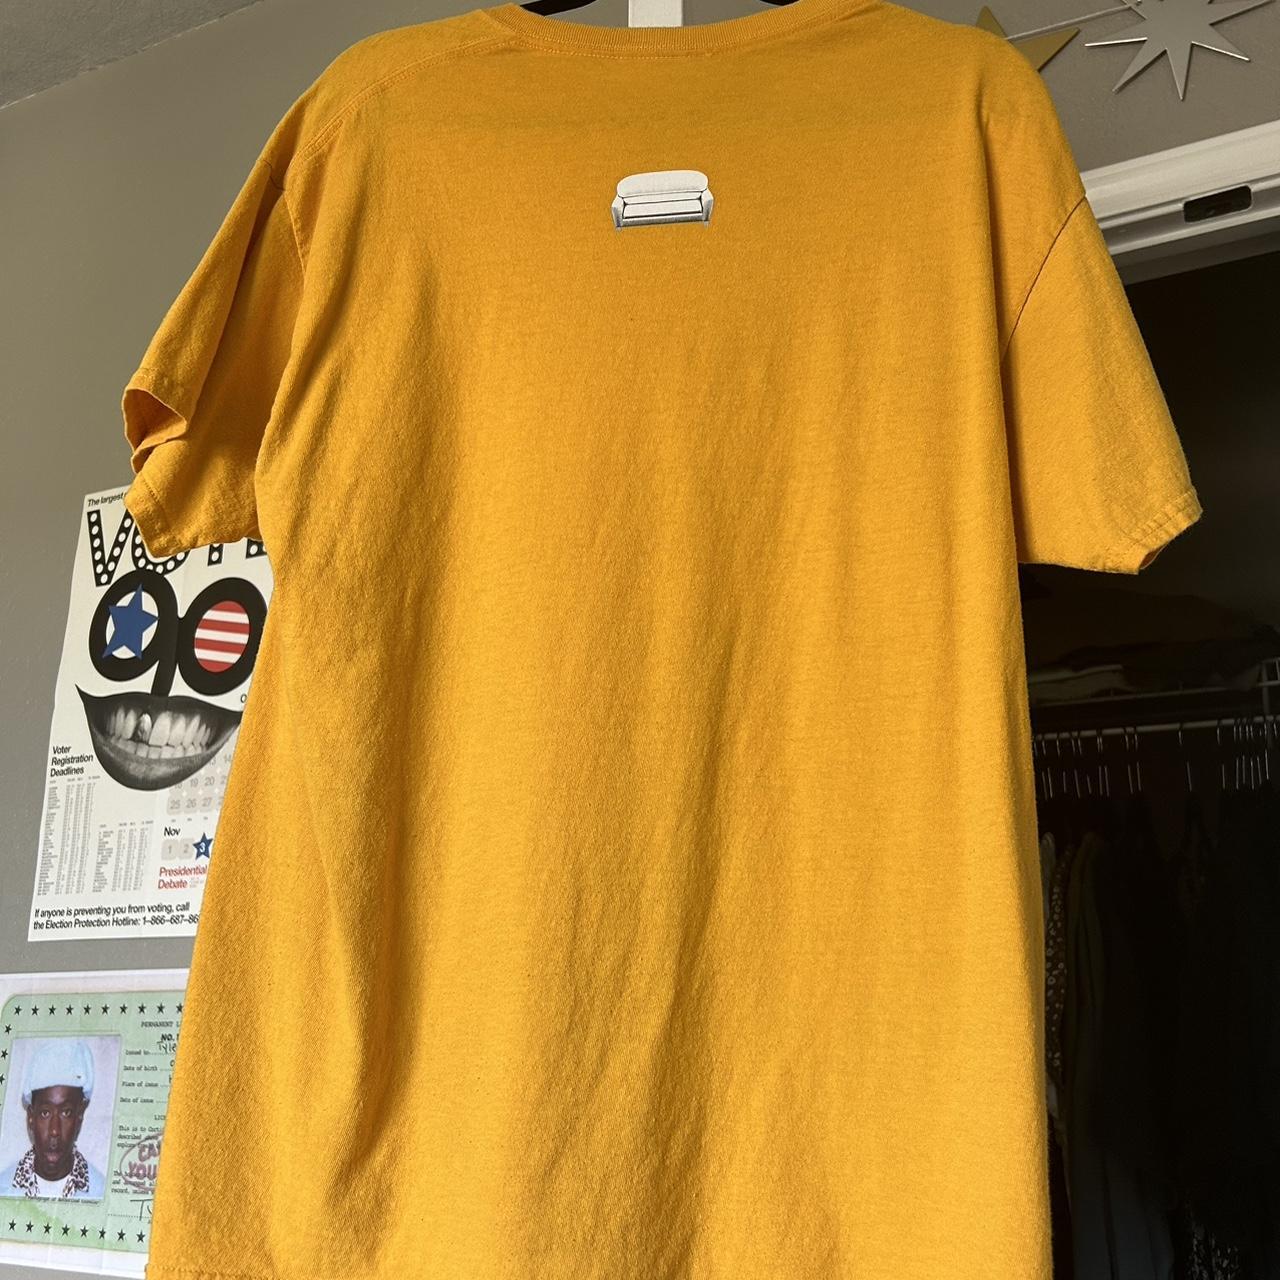 Brockhampton Men's Yellow T-shirt (2)